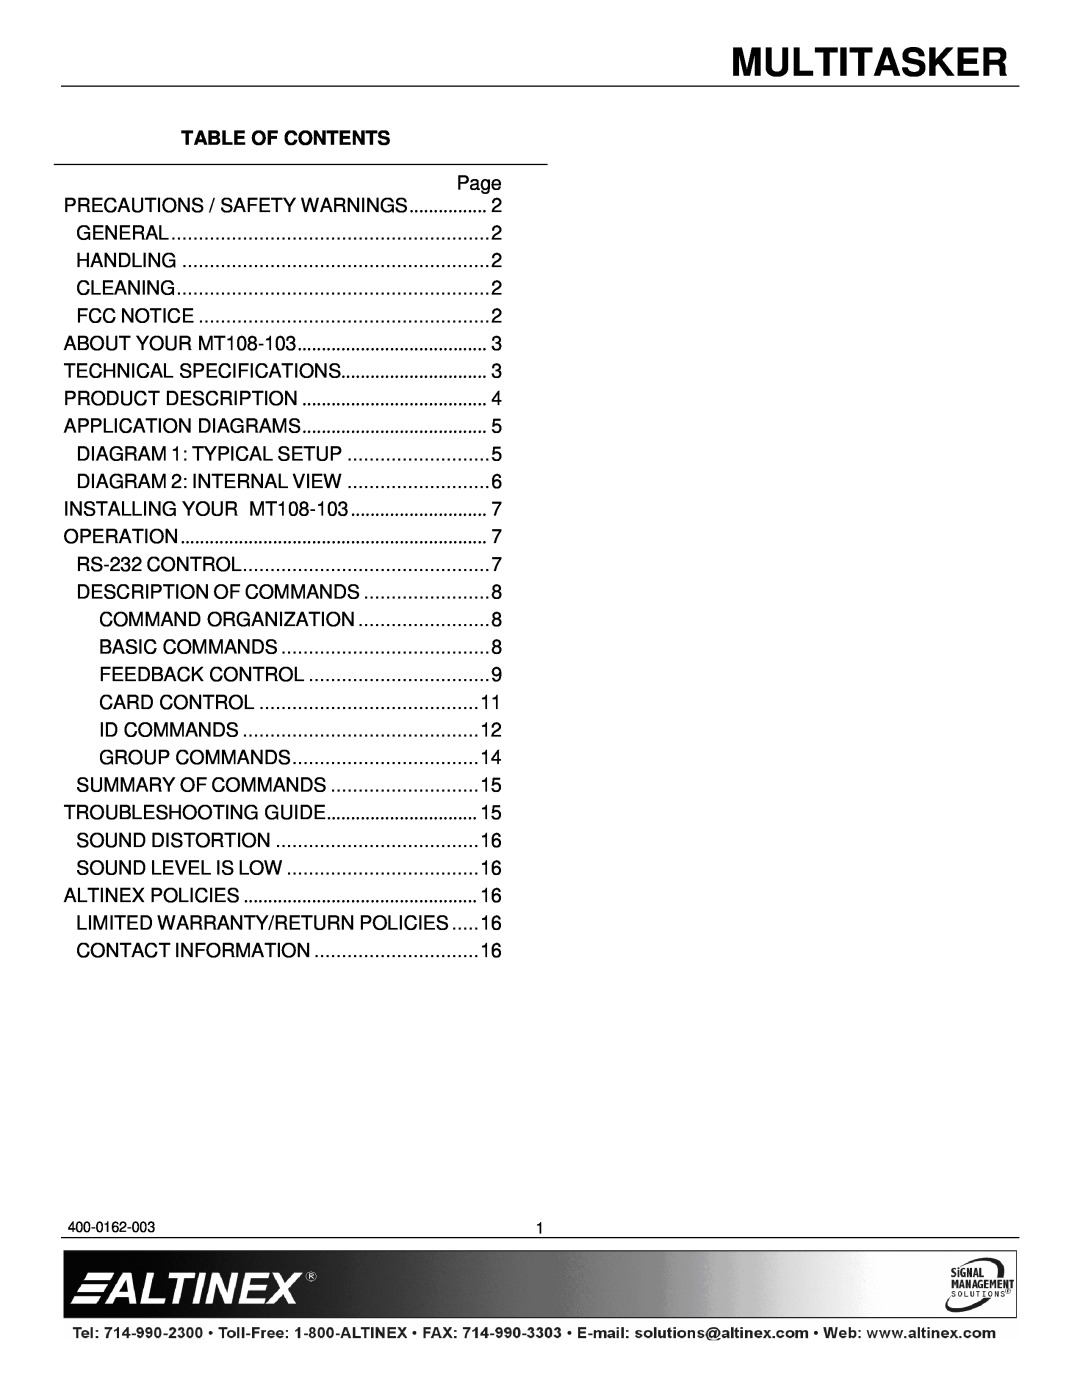 Altinex MT108-103 manual Multitasker, Table Of Contents 